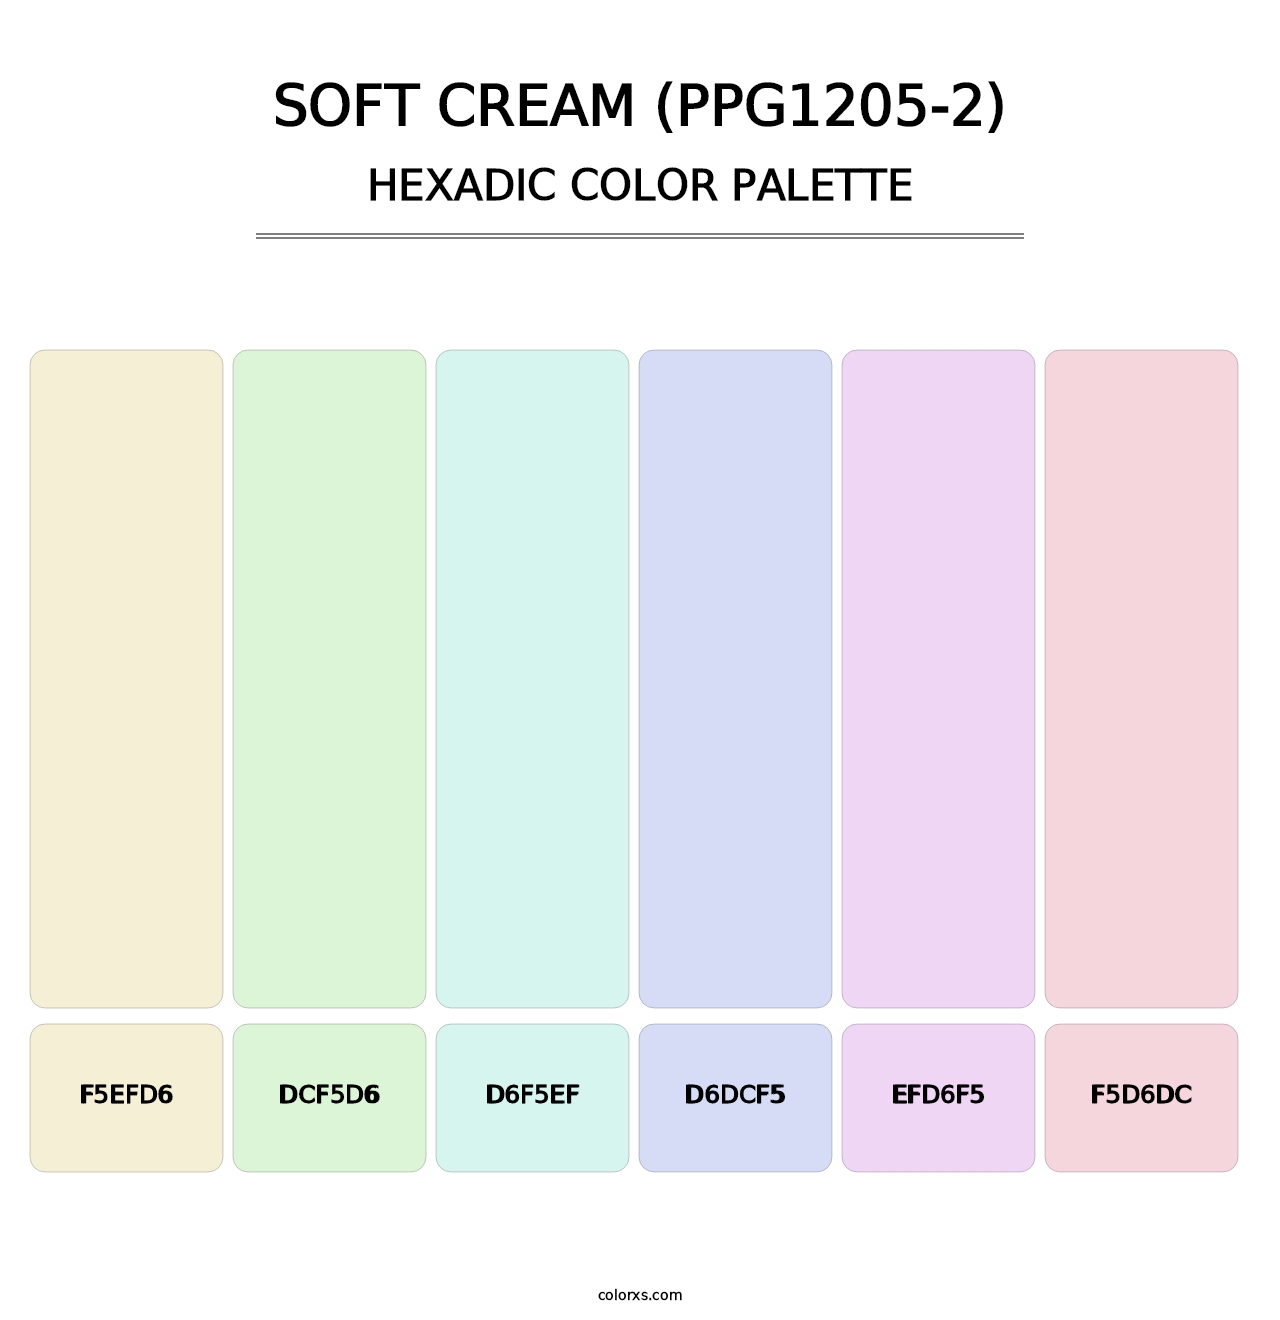 Soft Cream (PPG1205-2) - Hexadic Color Palette